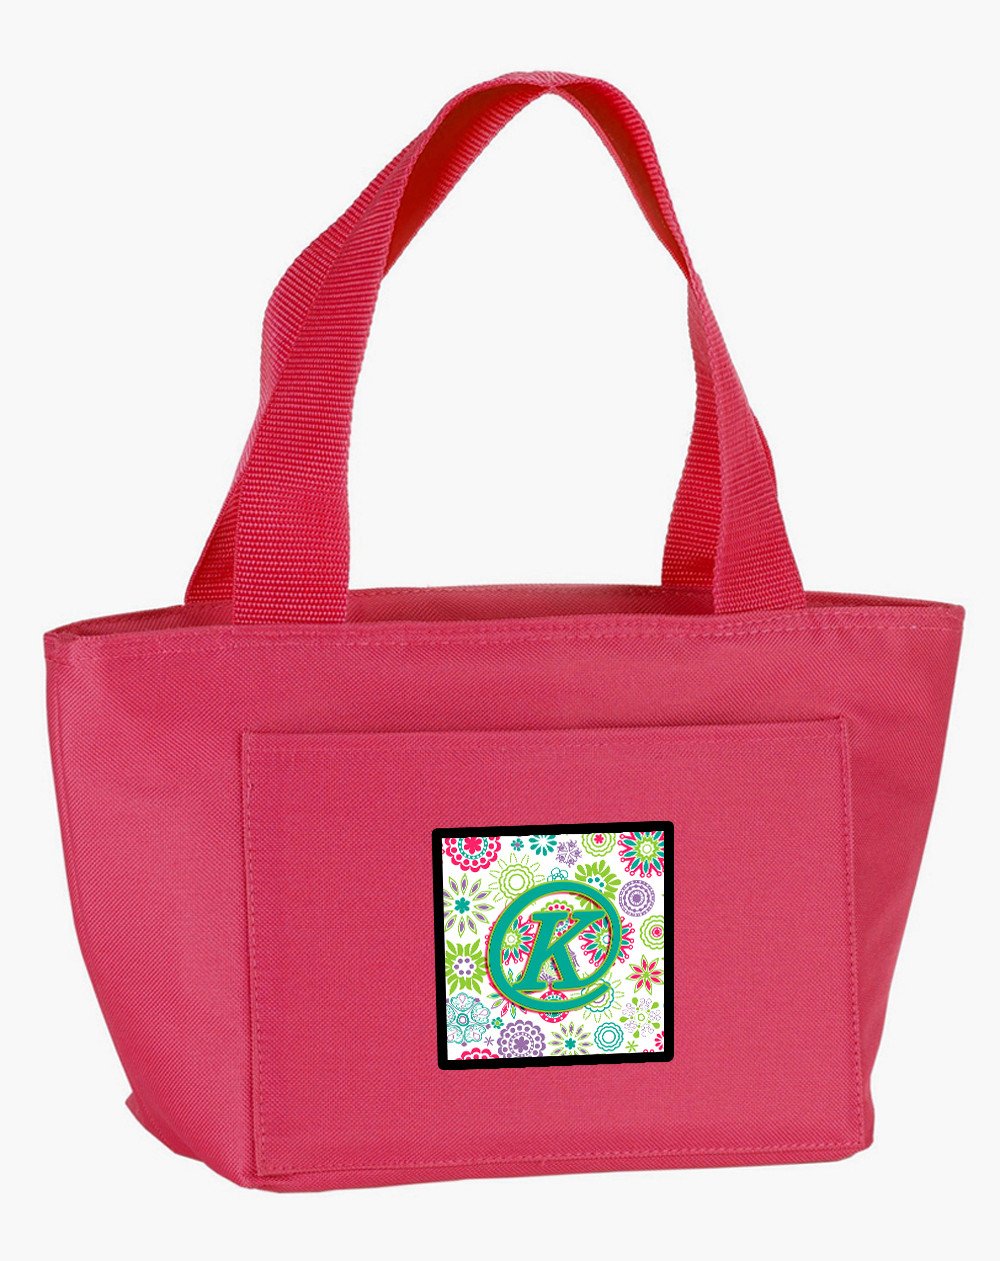 Letter K Flowers Pink Teal Green Initial Lunch Bag CJ2011-KPK-8808 by Caroline's Treasures